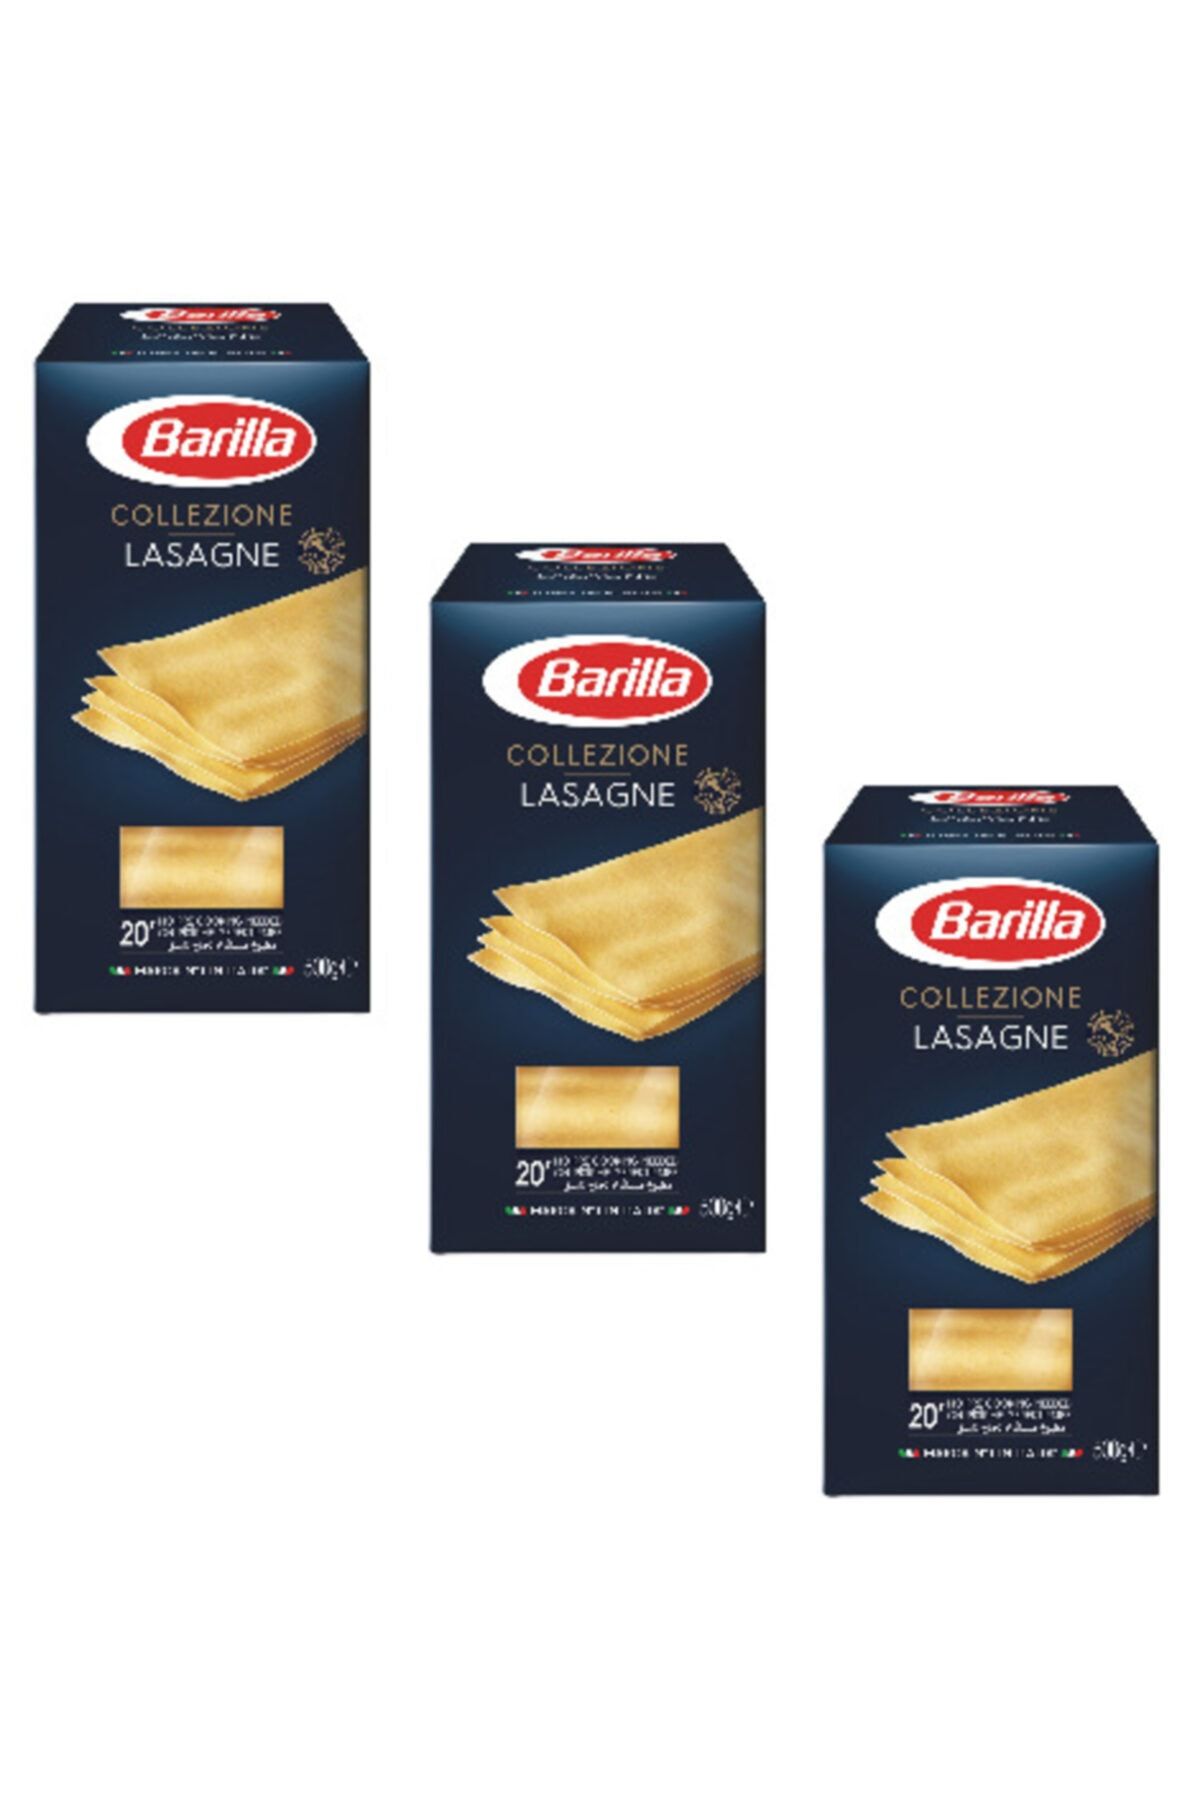 Barilla Lazanya / Lasagne Sade Makarna 500 Gr. X 3 Adet (özel Koleksiyon)